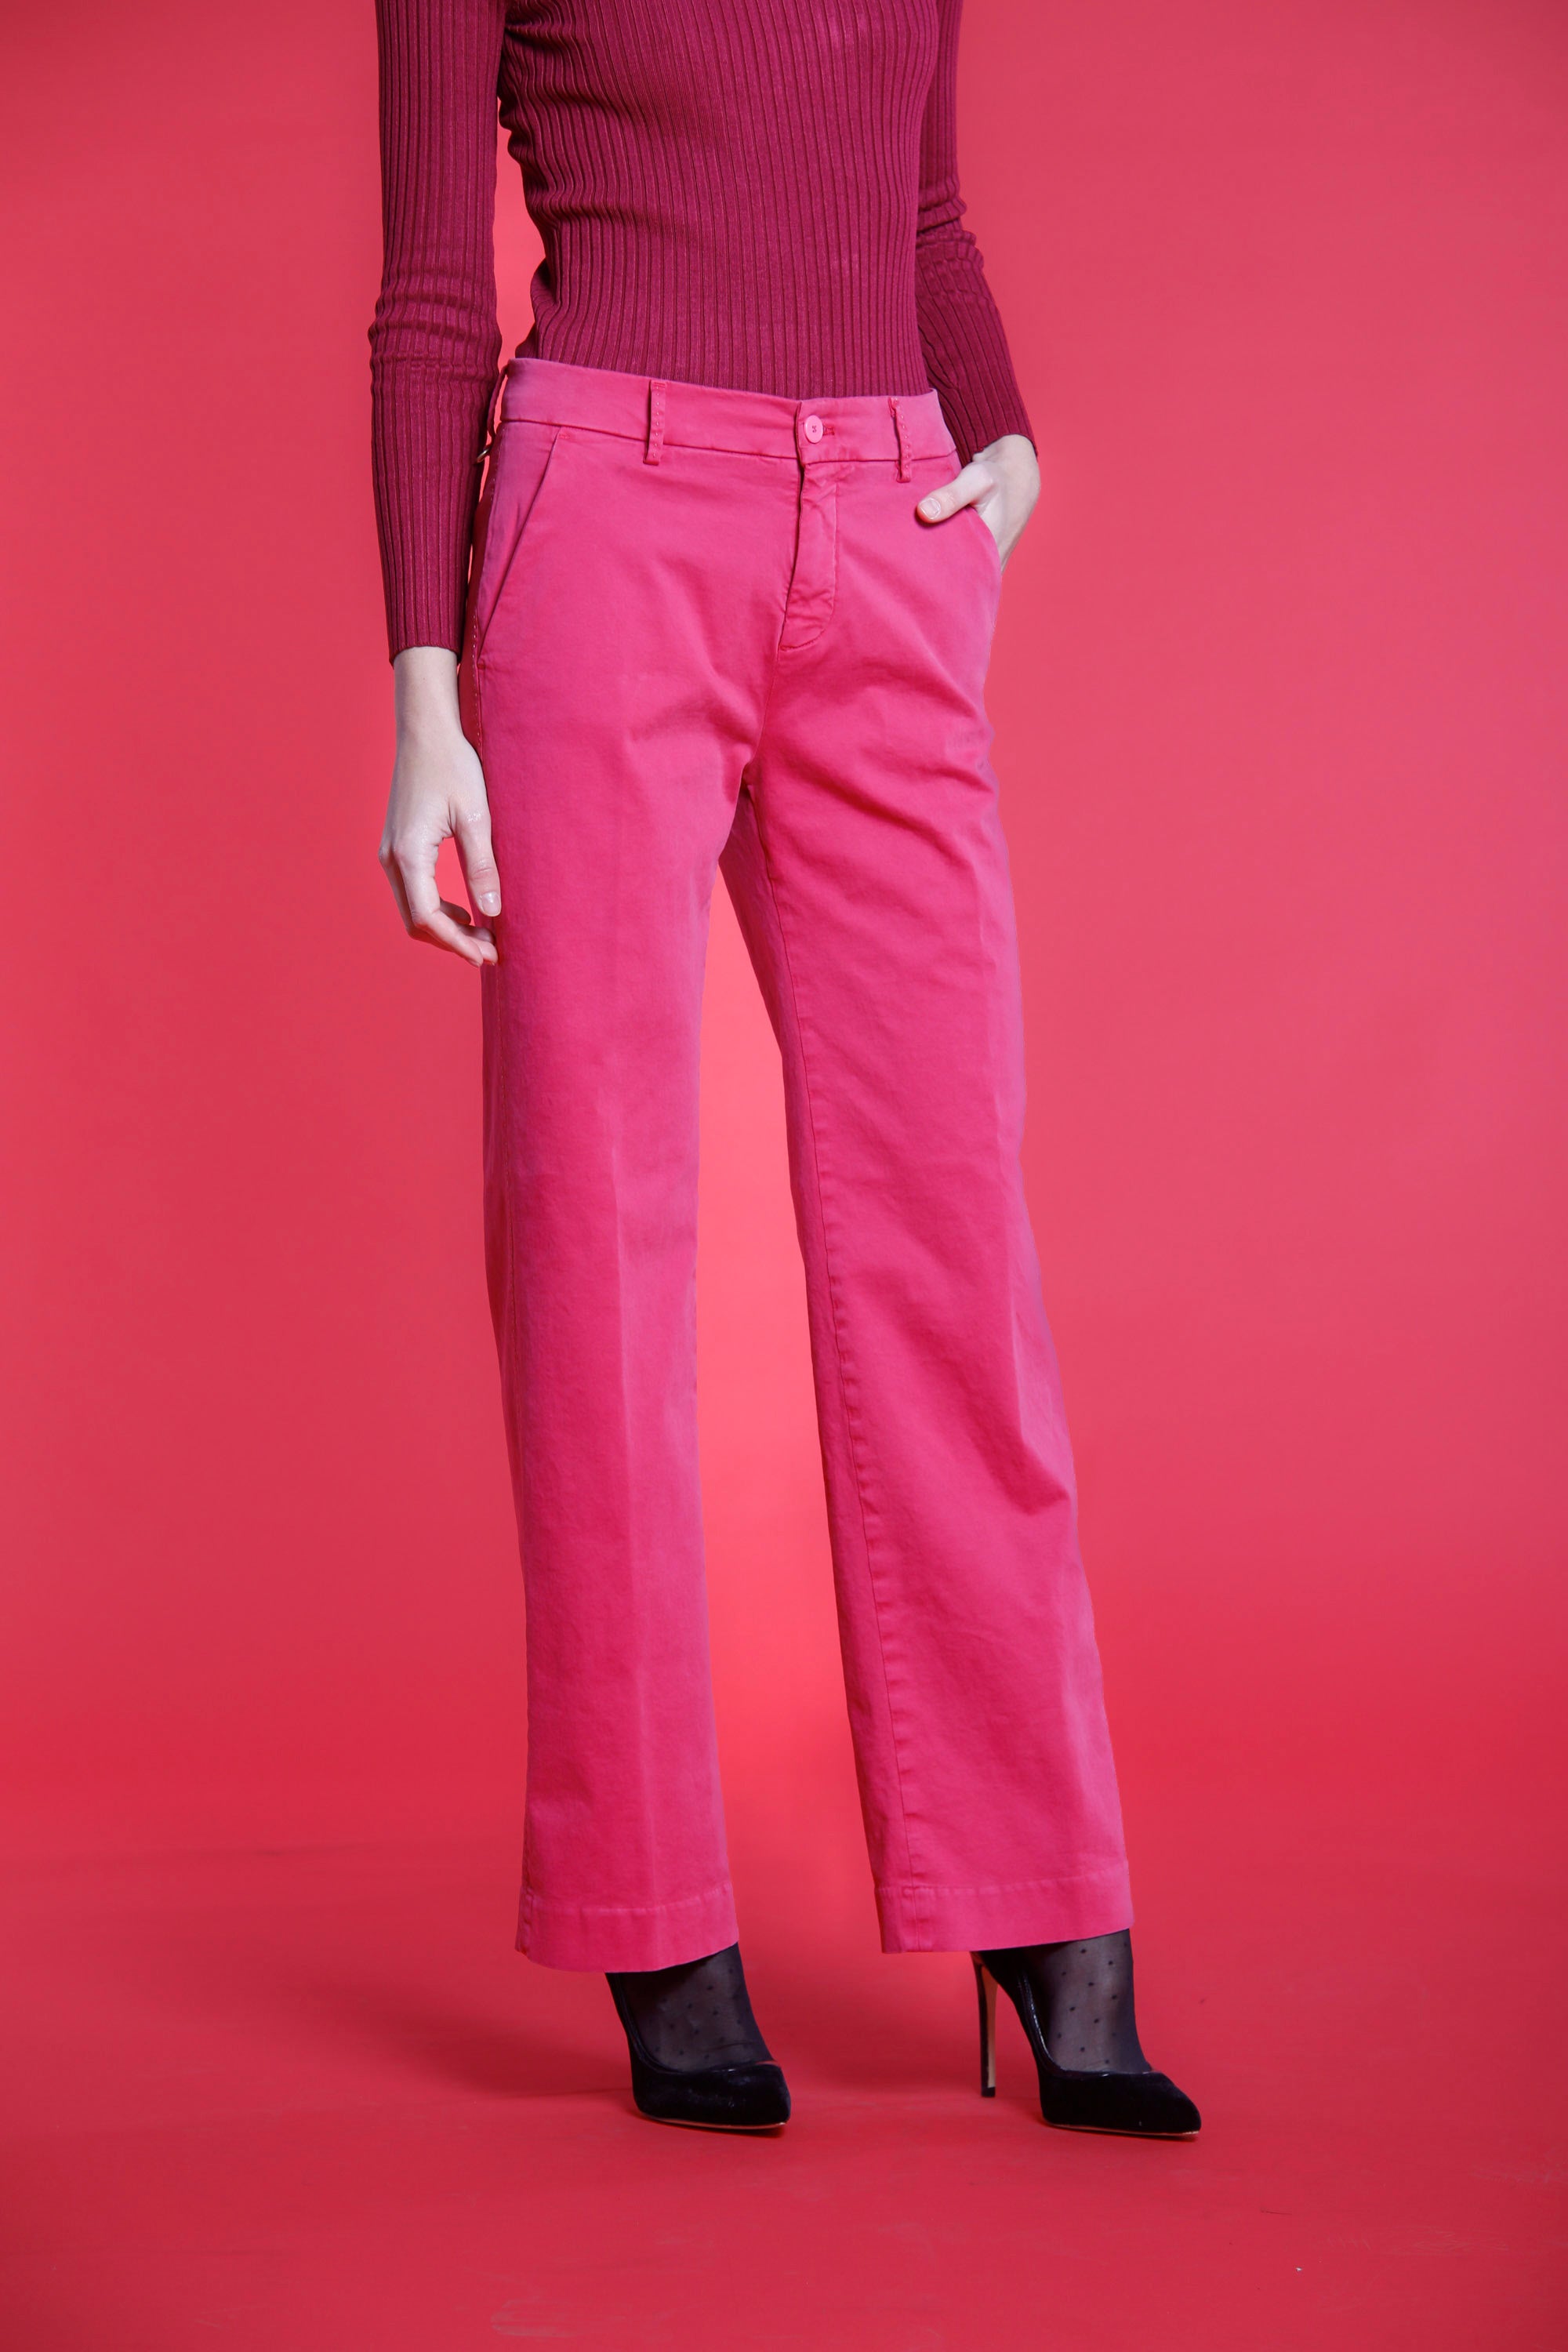 Image 3 du pantalon chino femme en satin fuchsia modèle New York Straight de Mason's